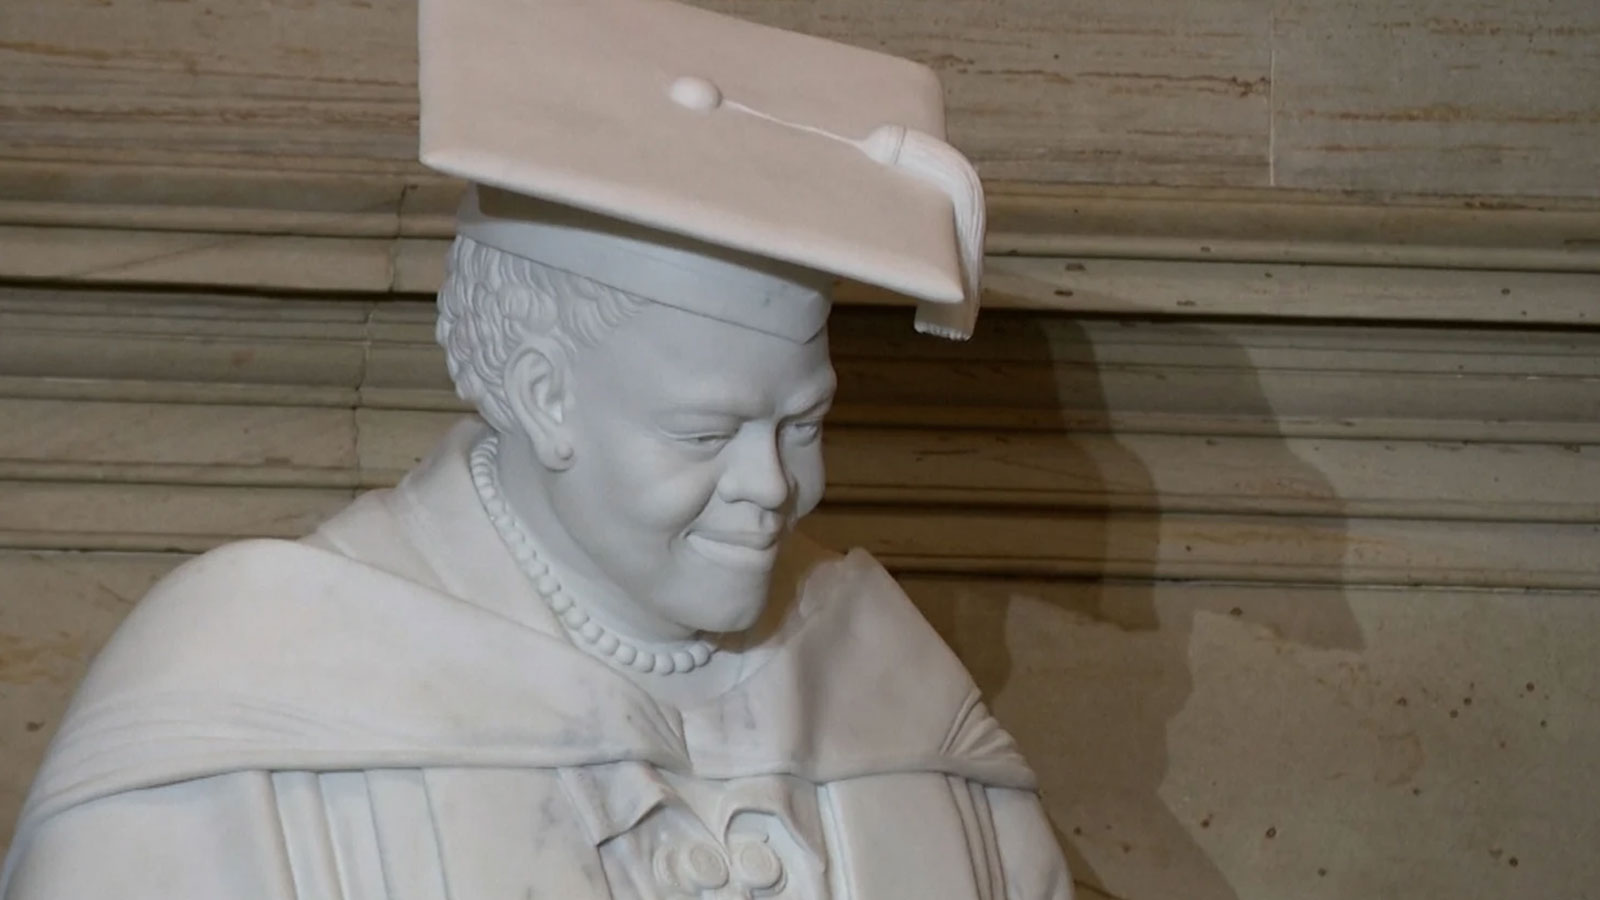 Statue of Black Educator Replaces Confederate General in U.S. Capitol